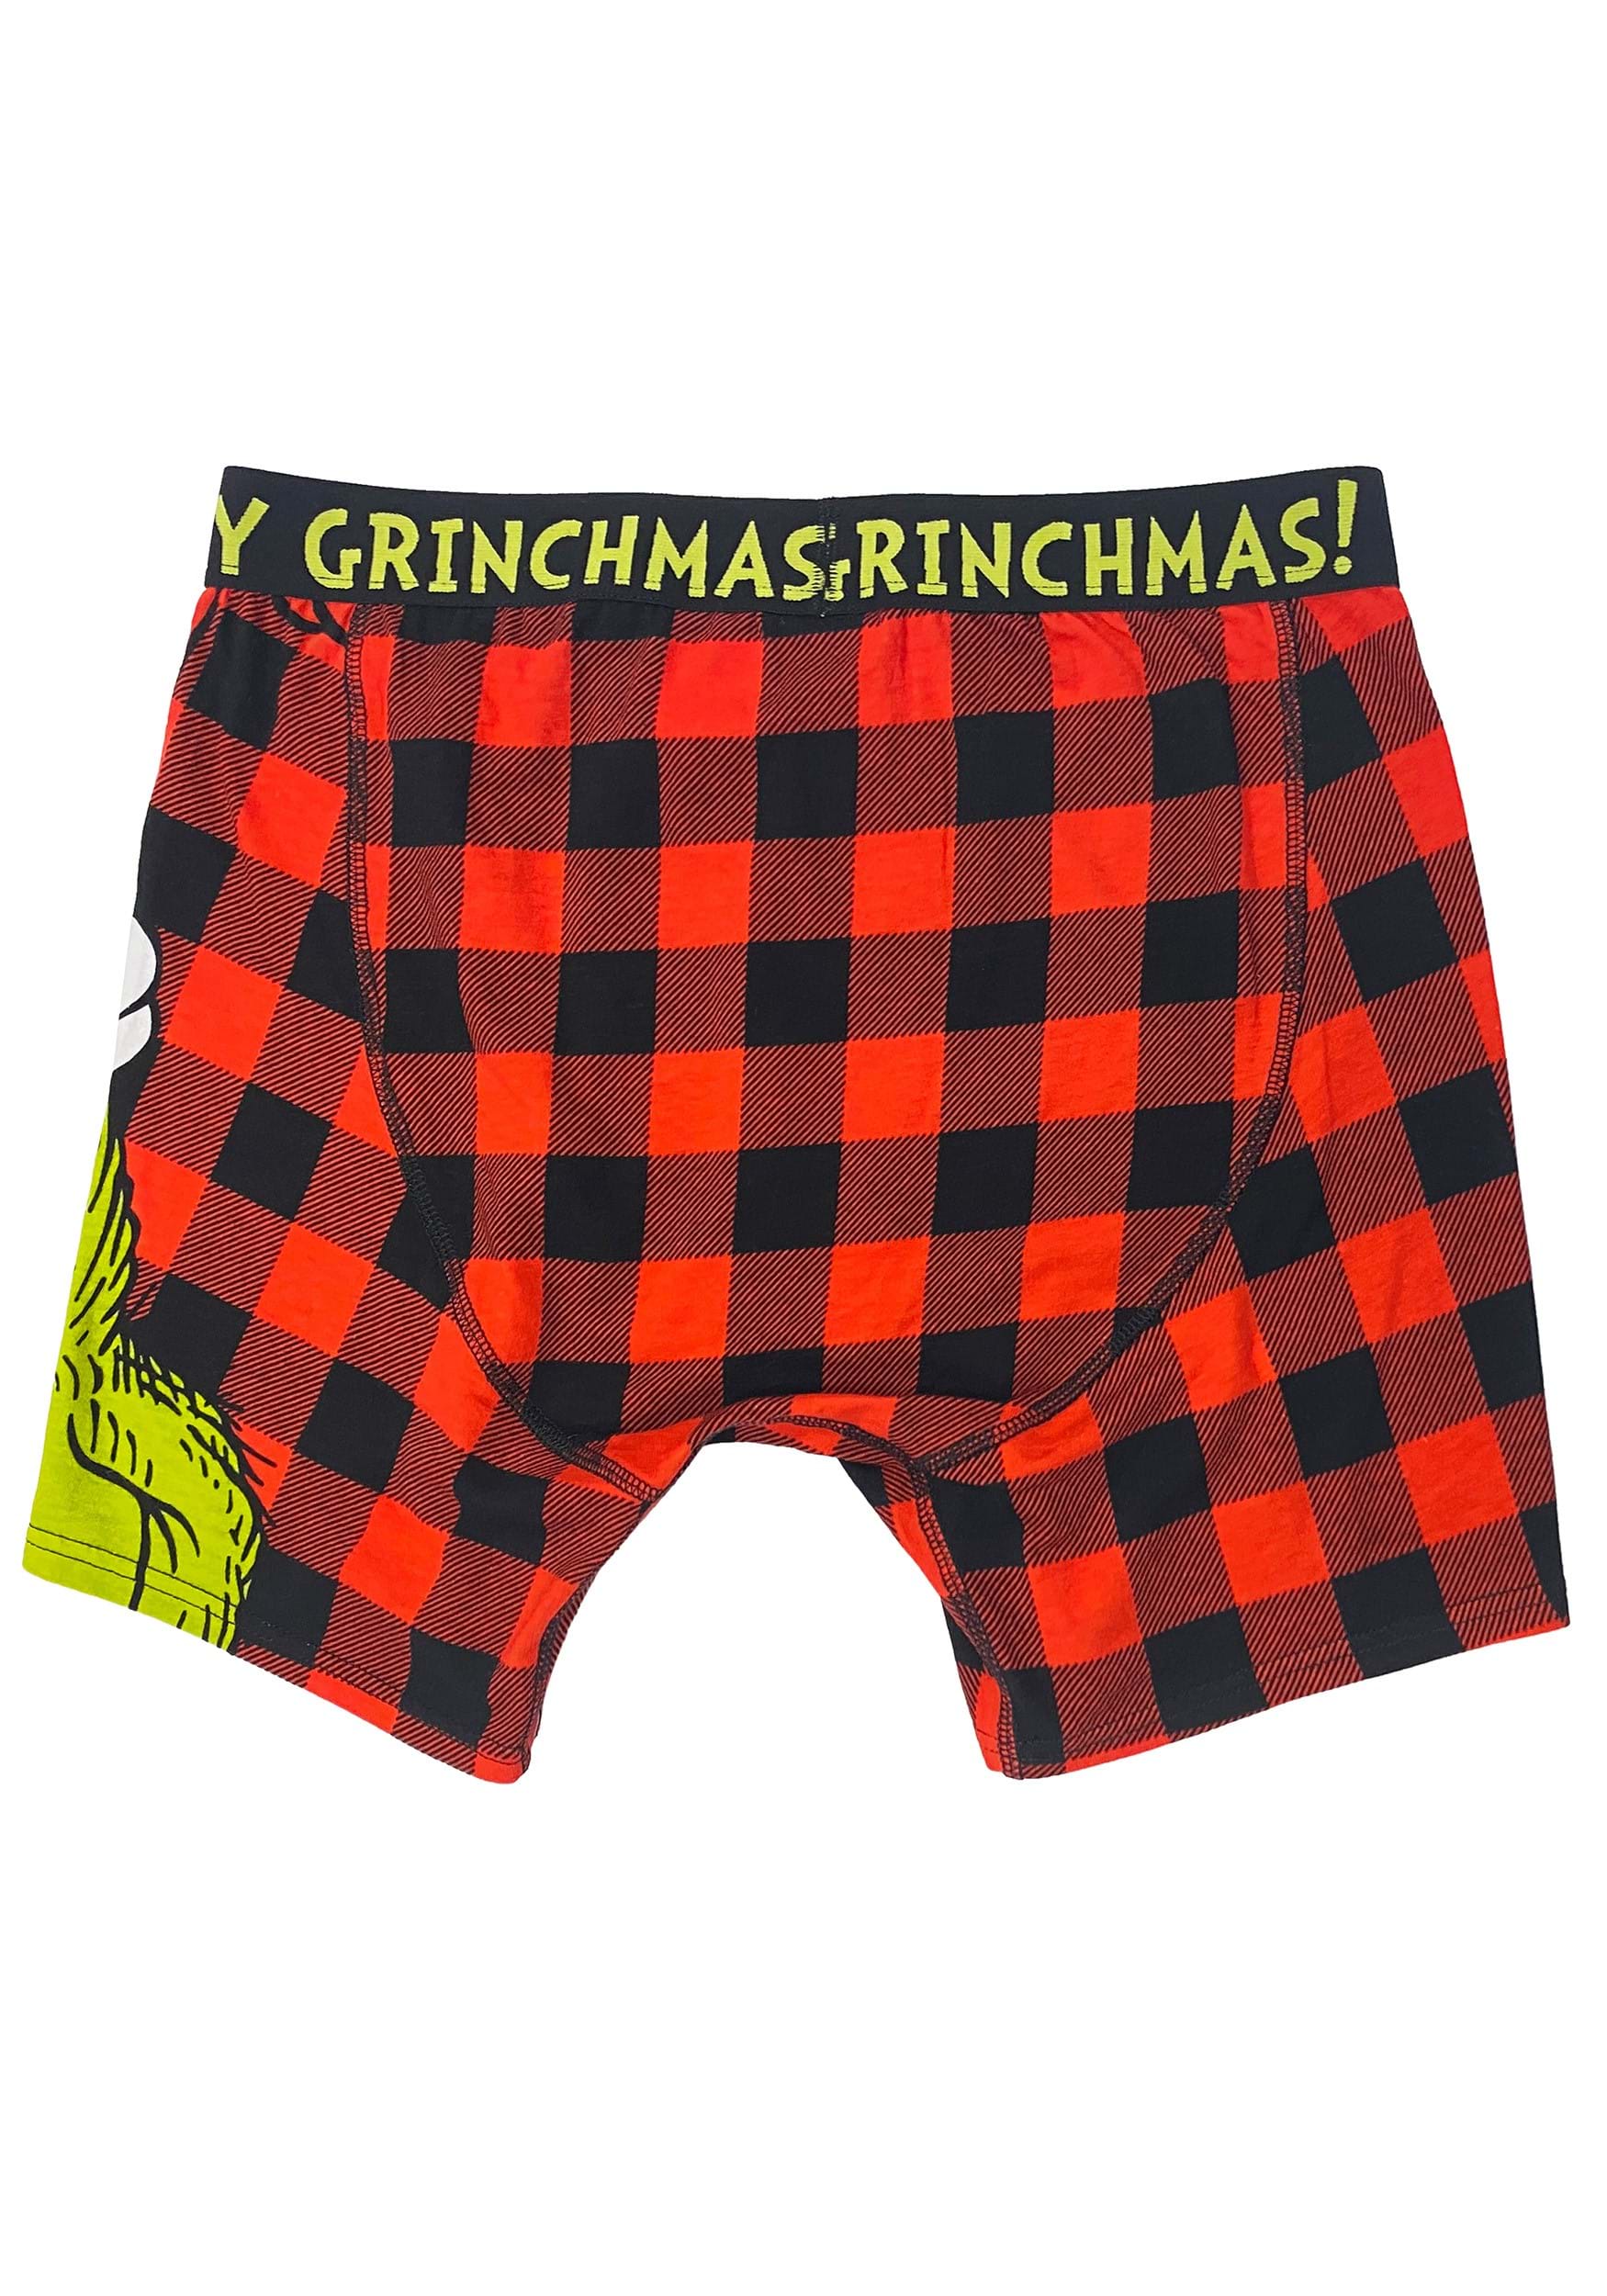 Underwear & Socks, The Grinch Mens Boxers